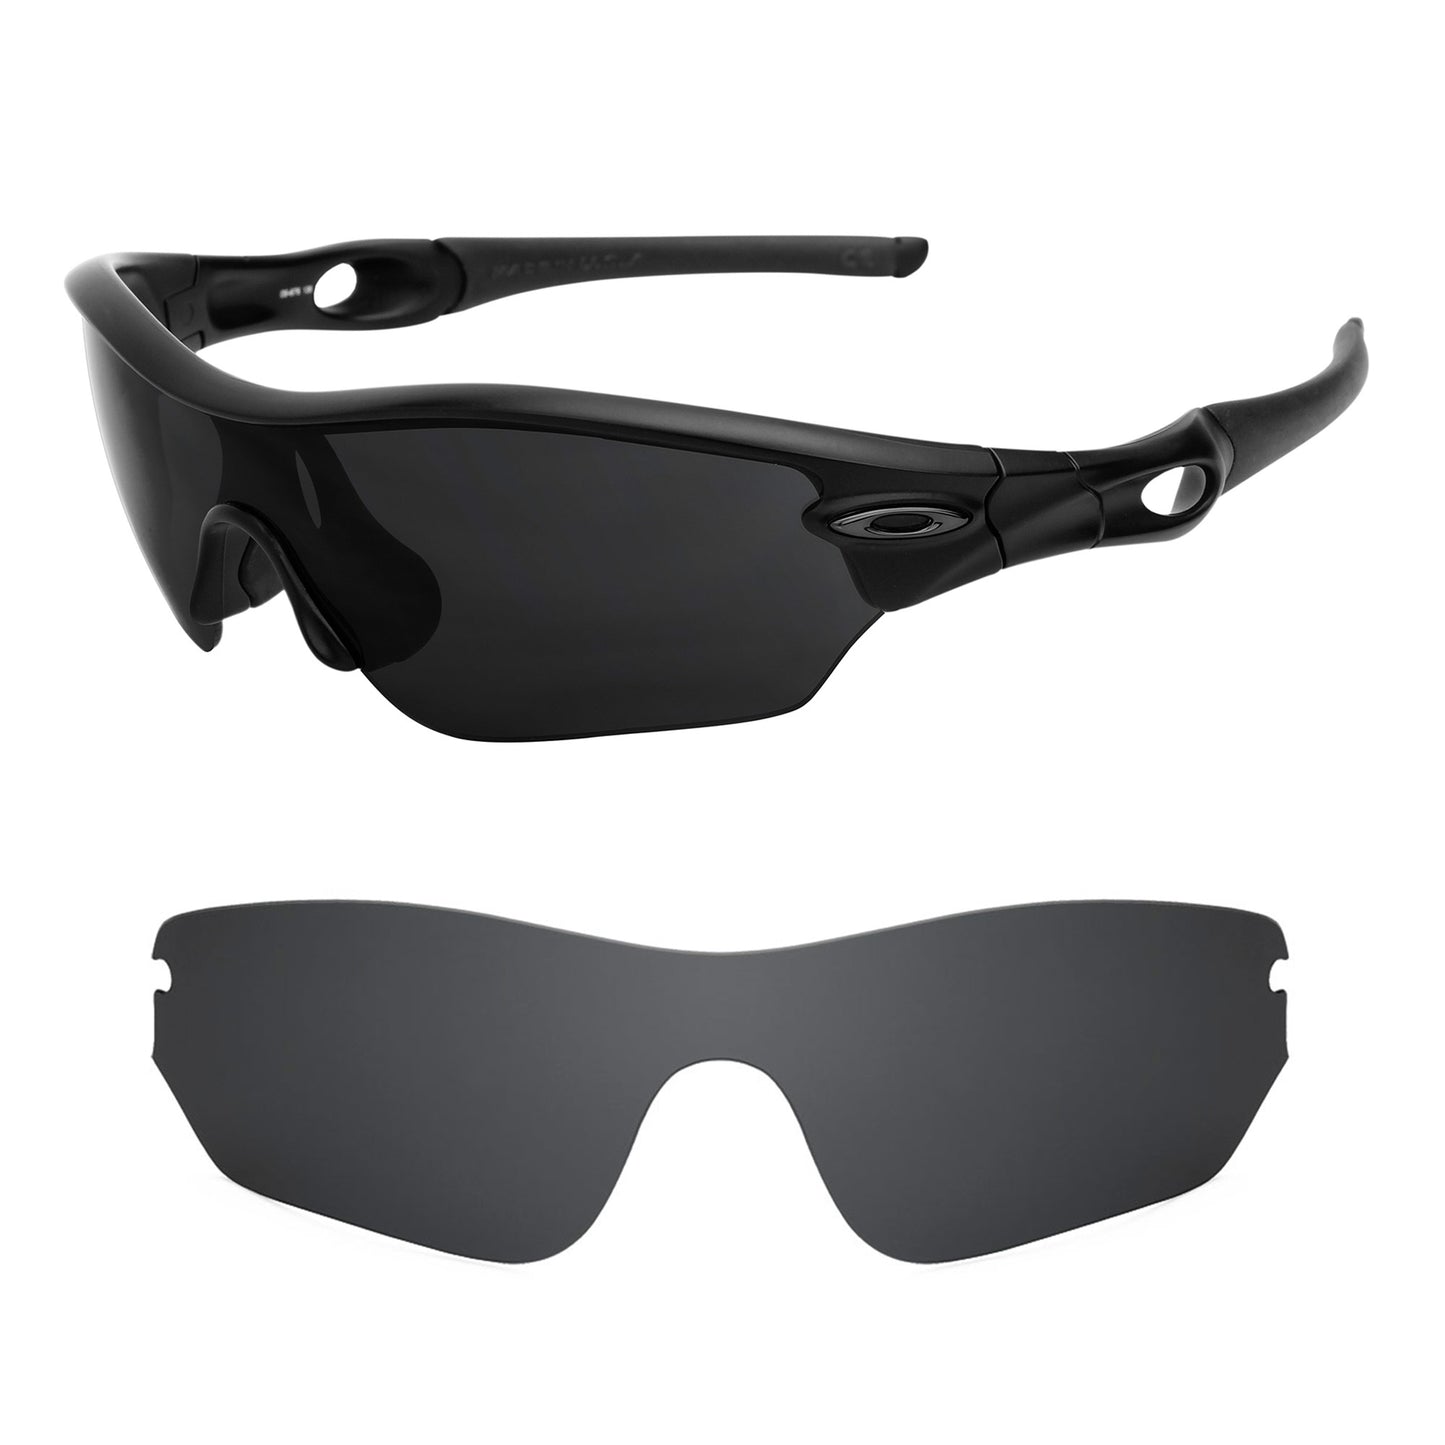 Oakley RadarLock Edge sunglasses with replacement lenses